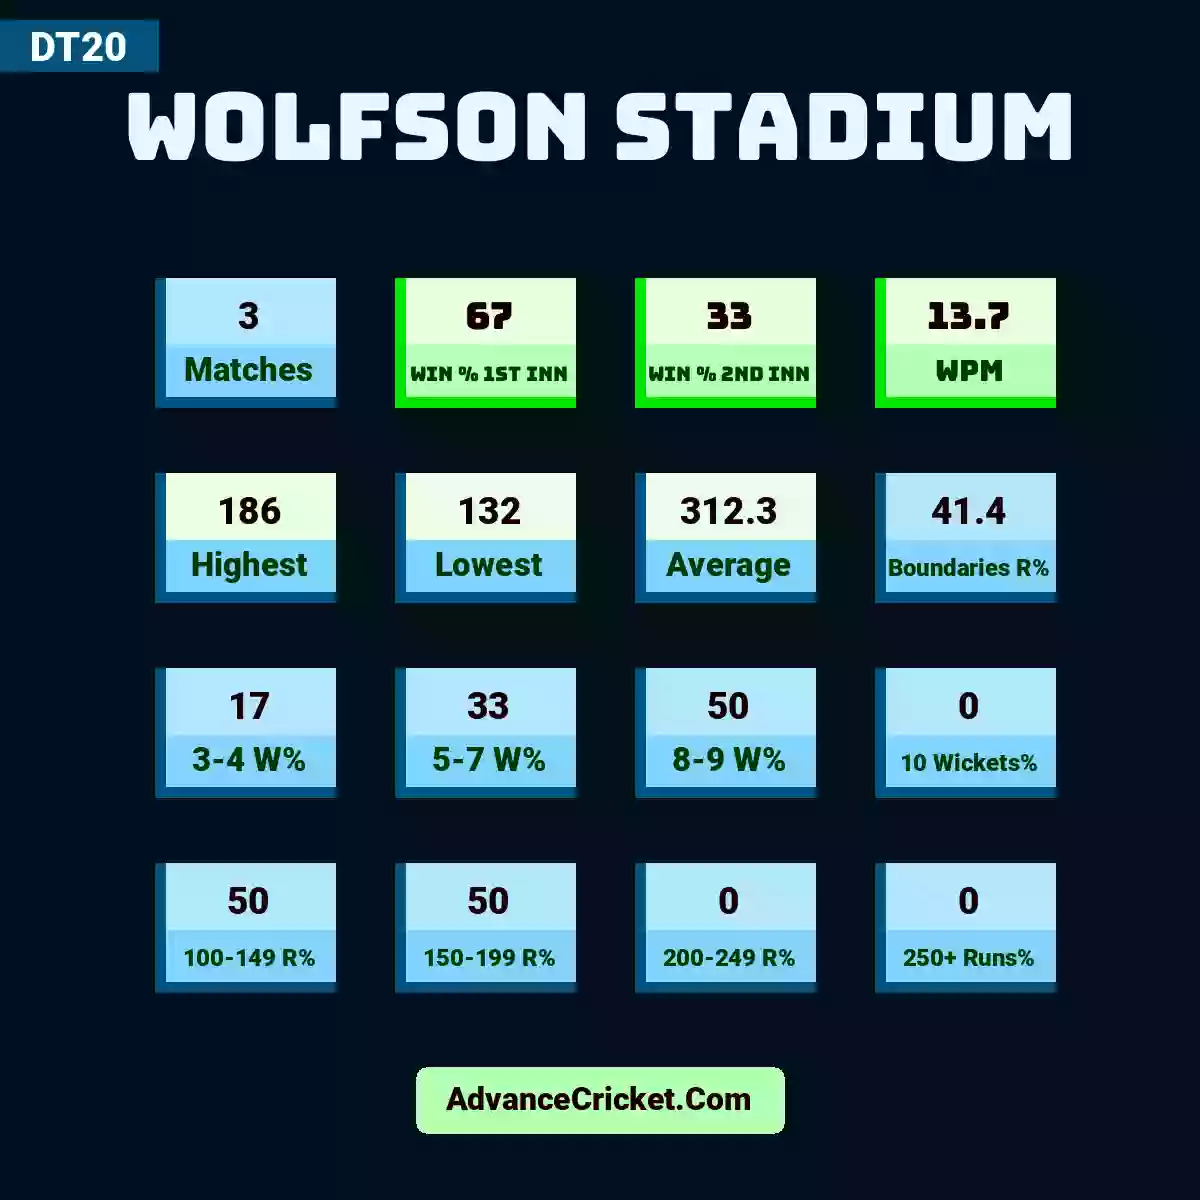 Image showing Wolfson Stadium DT20 with Matches: 3, Win % 1st Inn: 67, Win % 2nd Inn: 33, WPM: 13.7, Highest: 186, Lowest: 132, Average: 312.3, Boundaries R%: 41.4, 3-4 W%: 17, 5-7 W%: 33, 8-9 W%: 50, 10 Wickets%: 0, 100-149 R%: 50, 150-199 R%: 50, 200-249 R%: 0, 250+ Runs%: 0.